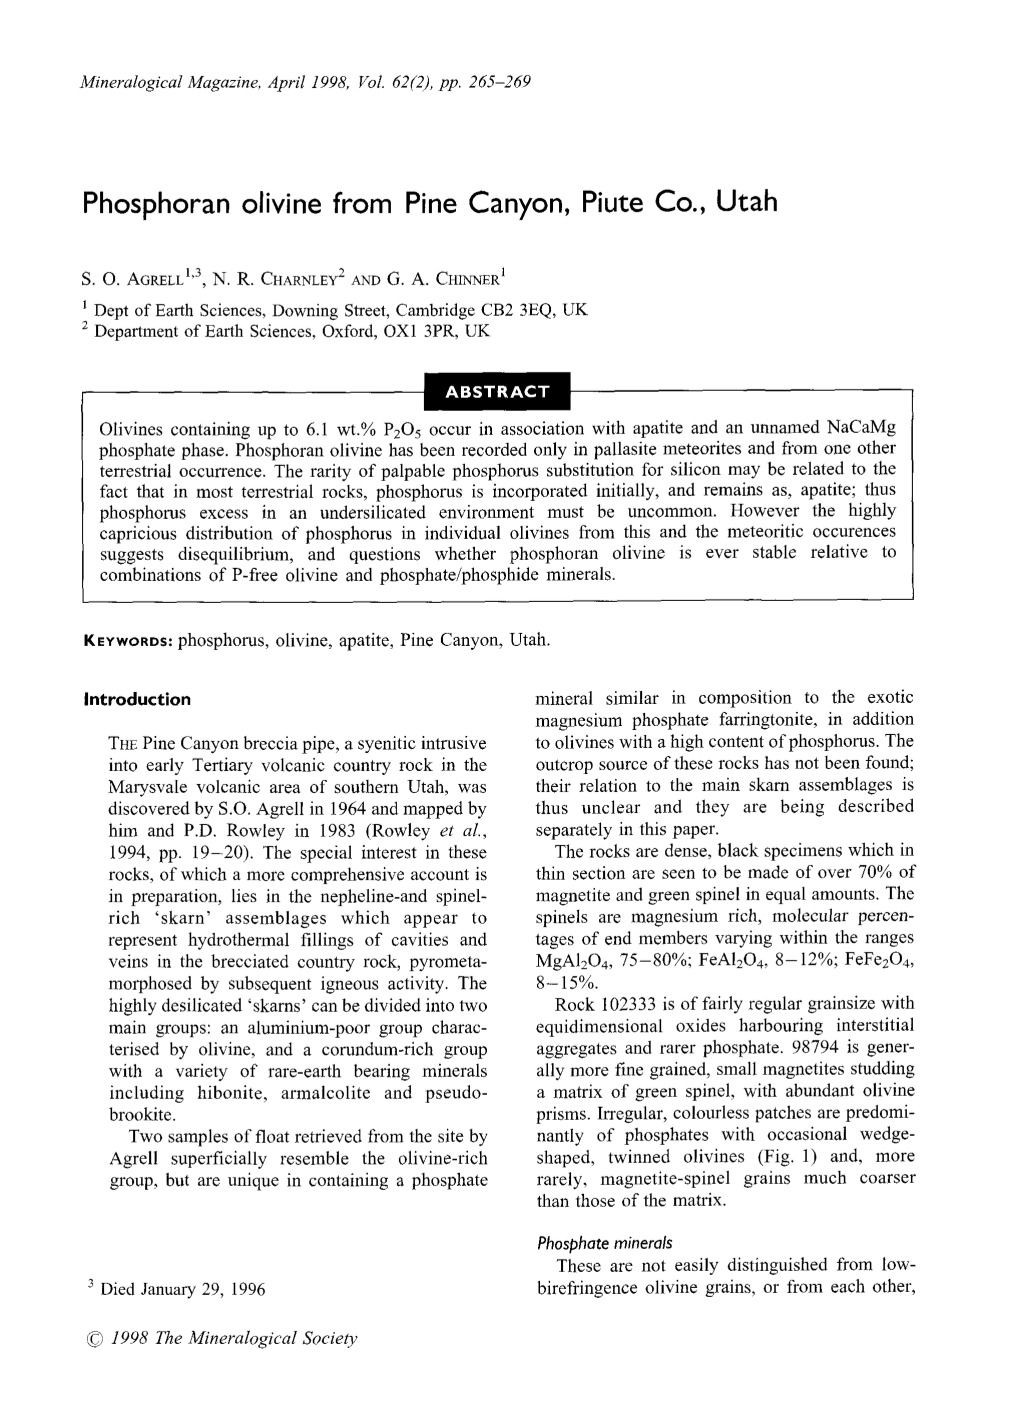 Phosphoran Olivine from Pine Canyon, Piute Co., Utah